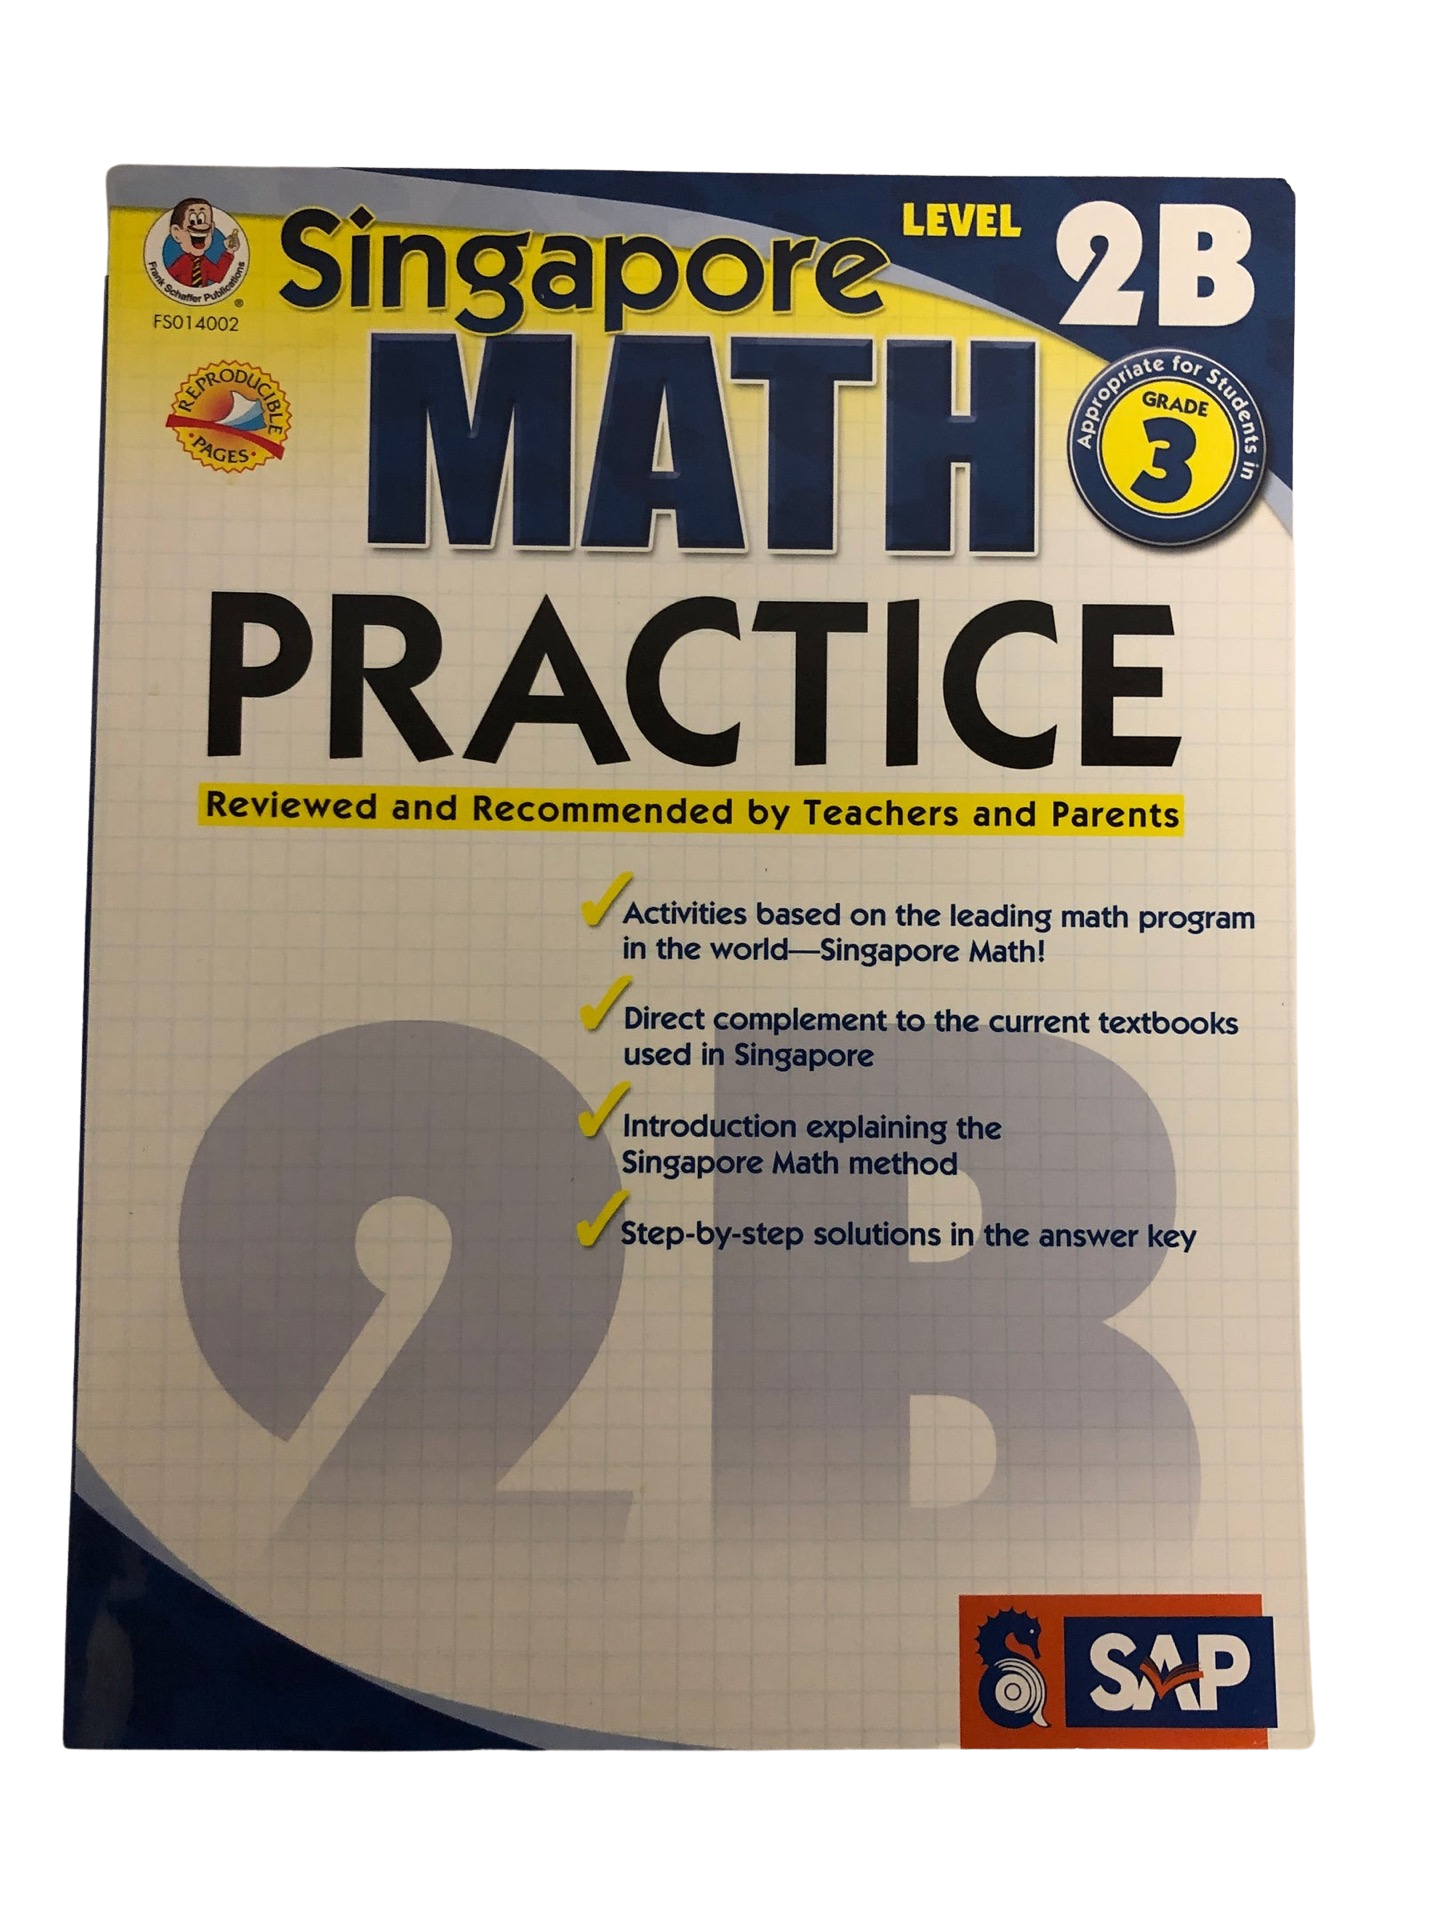 Singapore Math Practice (Level 2B) 3rd Grade